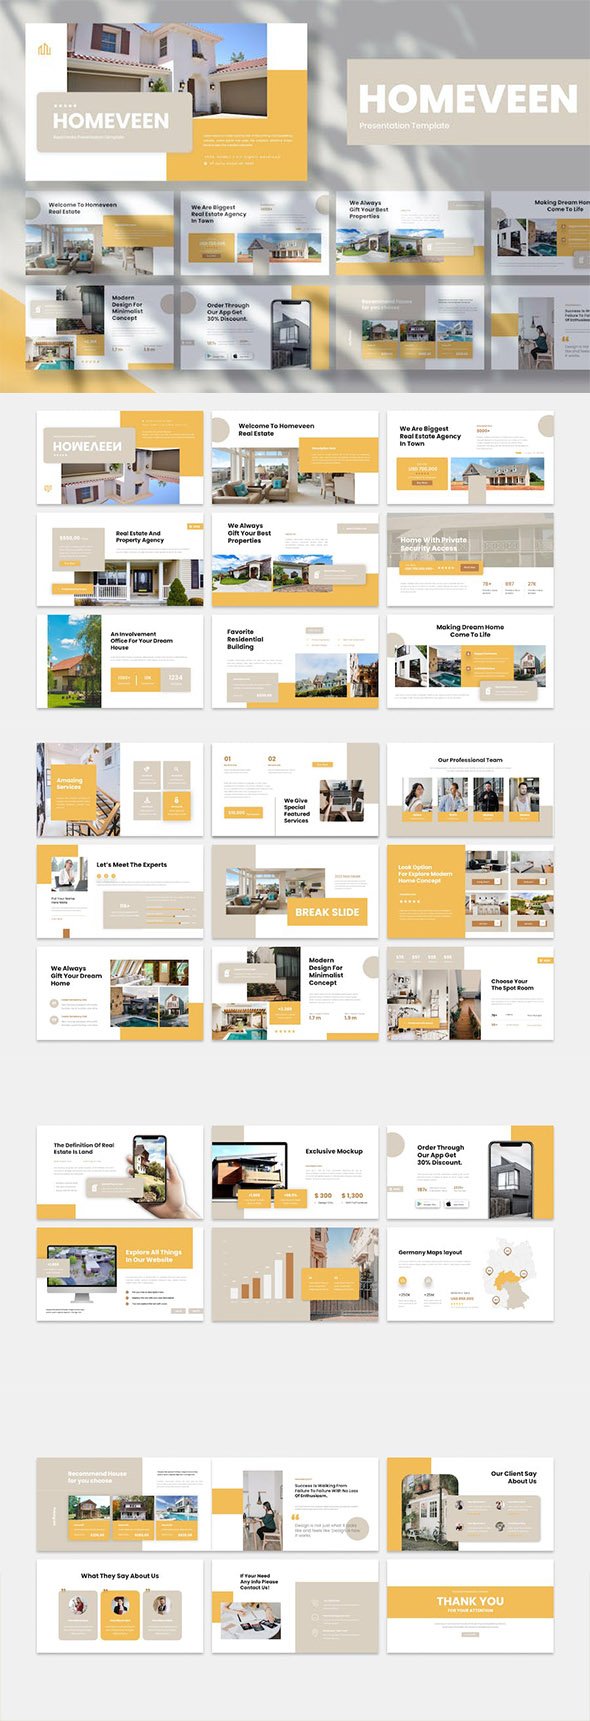 Homeveen - Interior Business PowerPoint - 5QQV76J